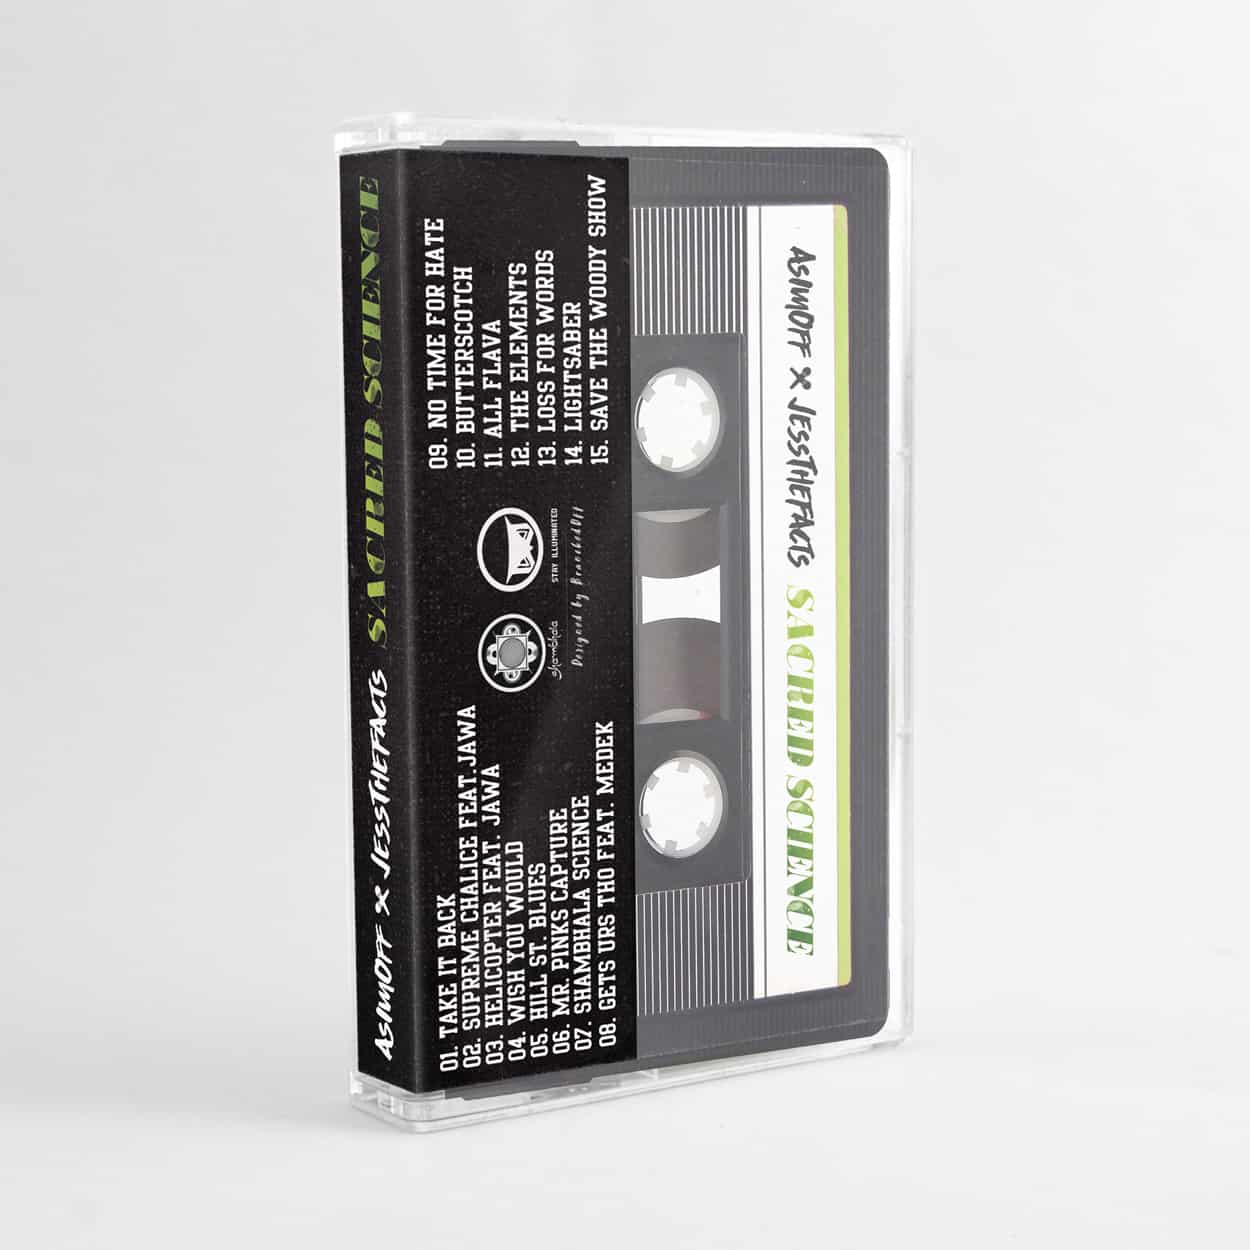 sacred science - cassette tape design